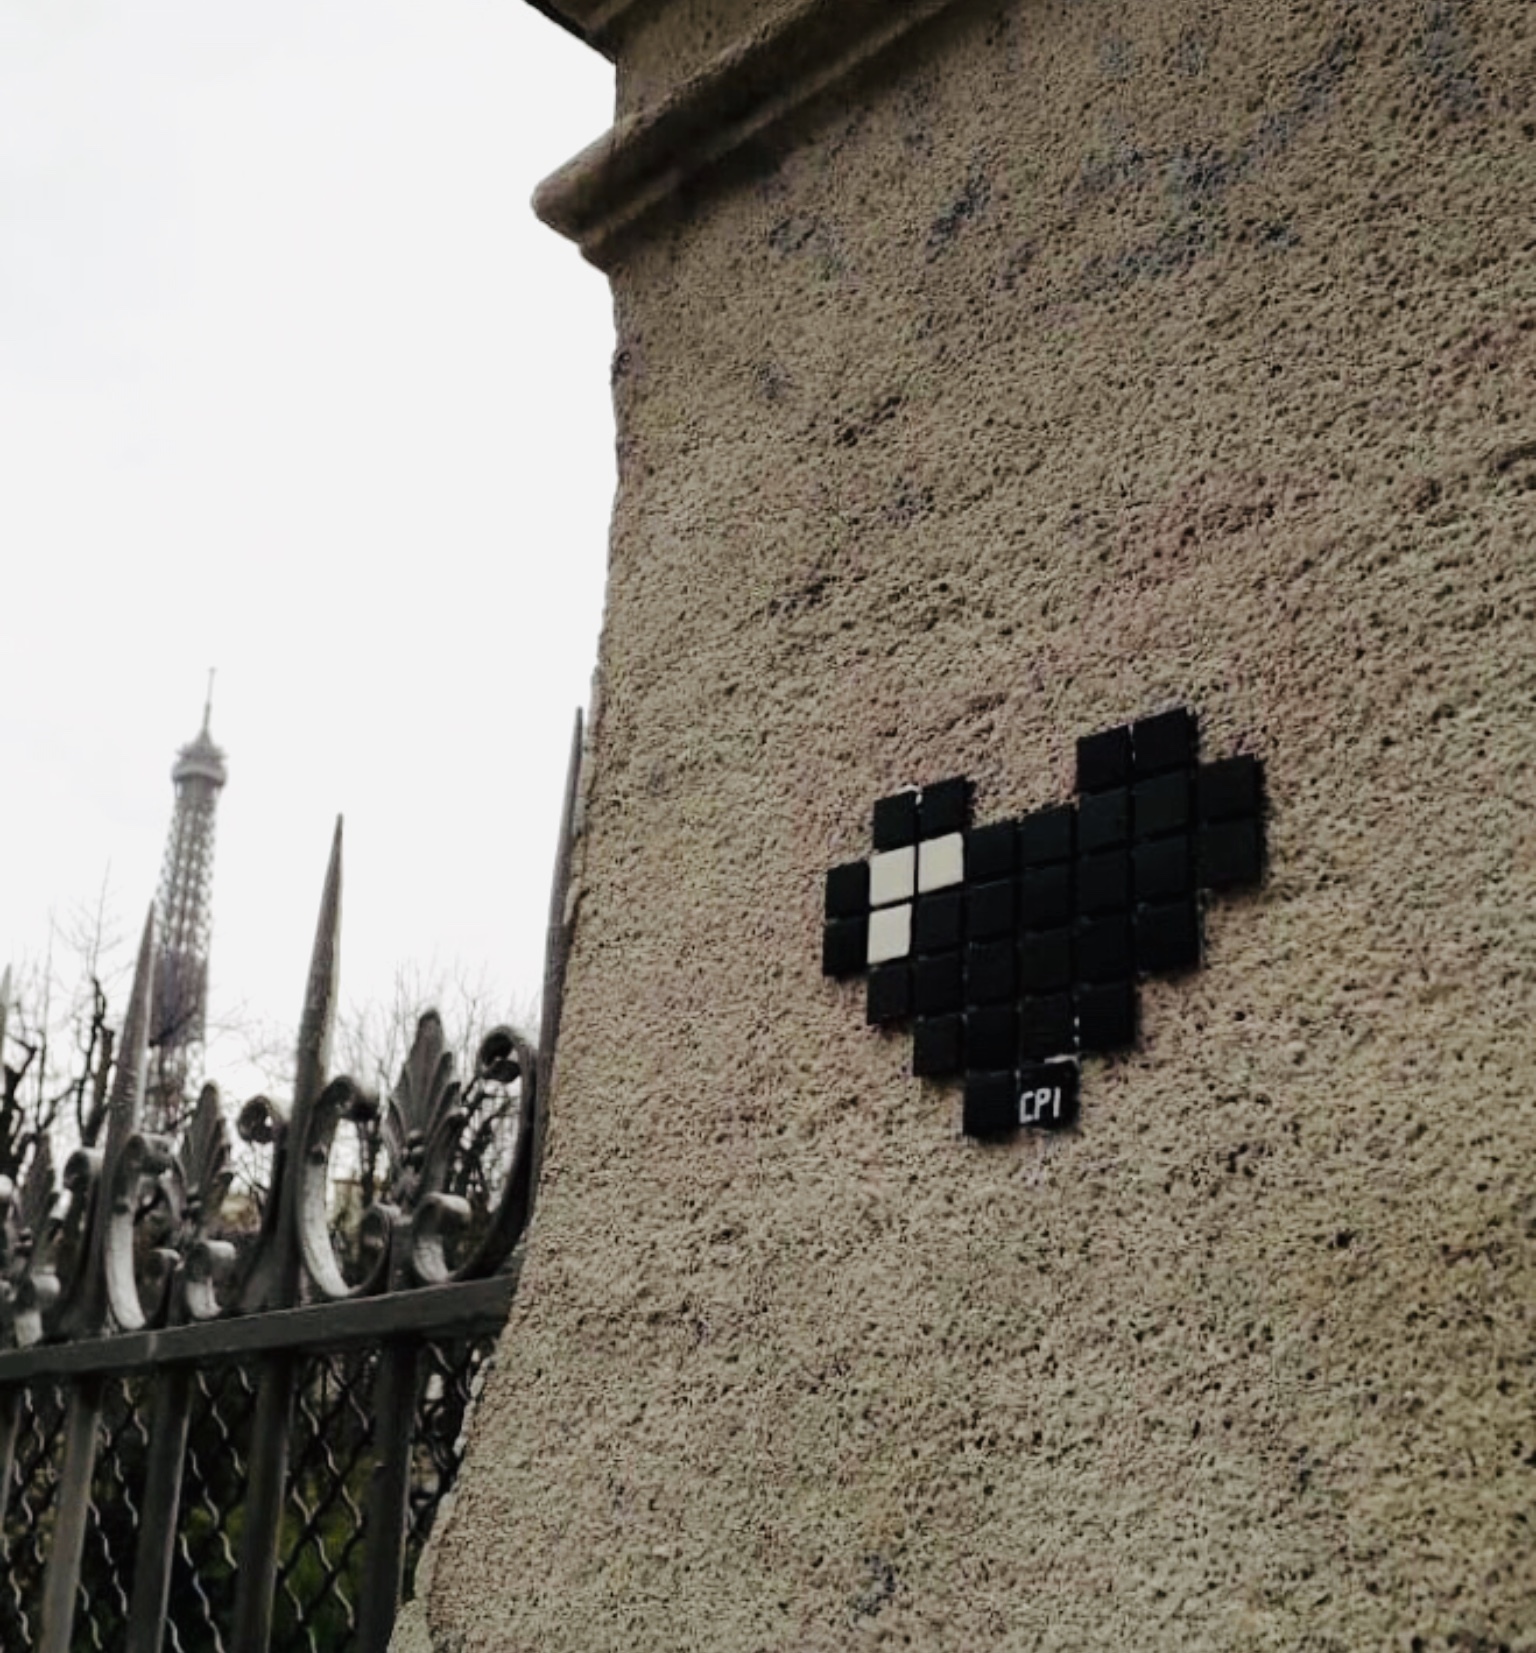 Sticking 5157 Pixel heart by the artist Coeur pixel captured by Artparis in Paris France